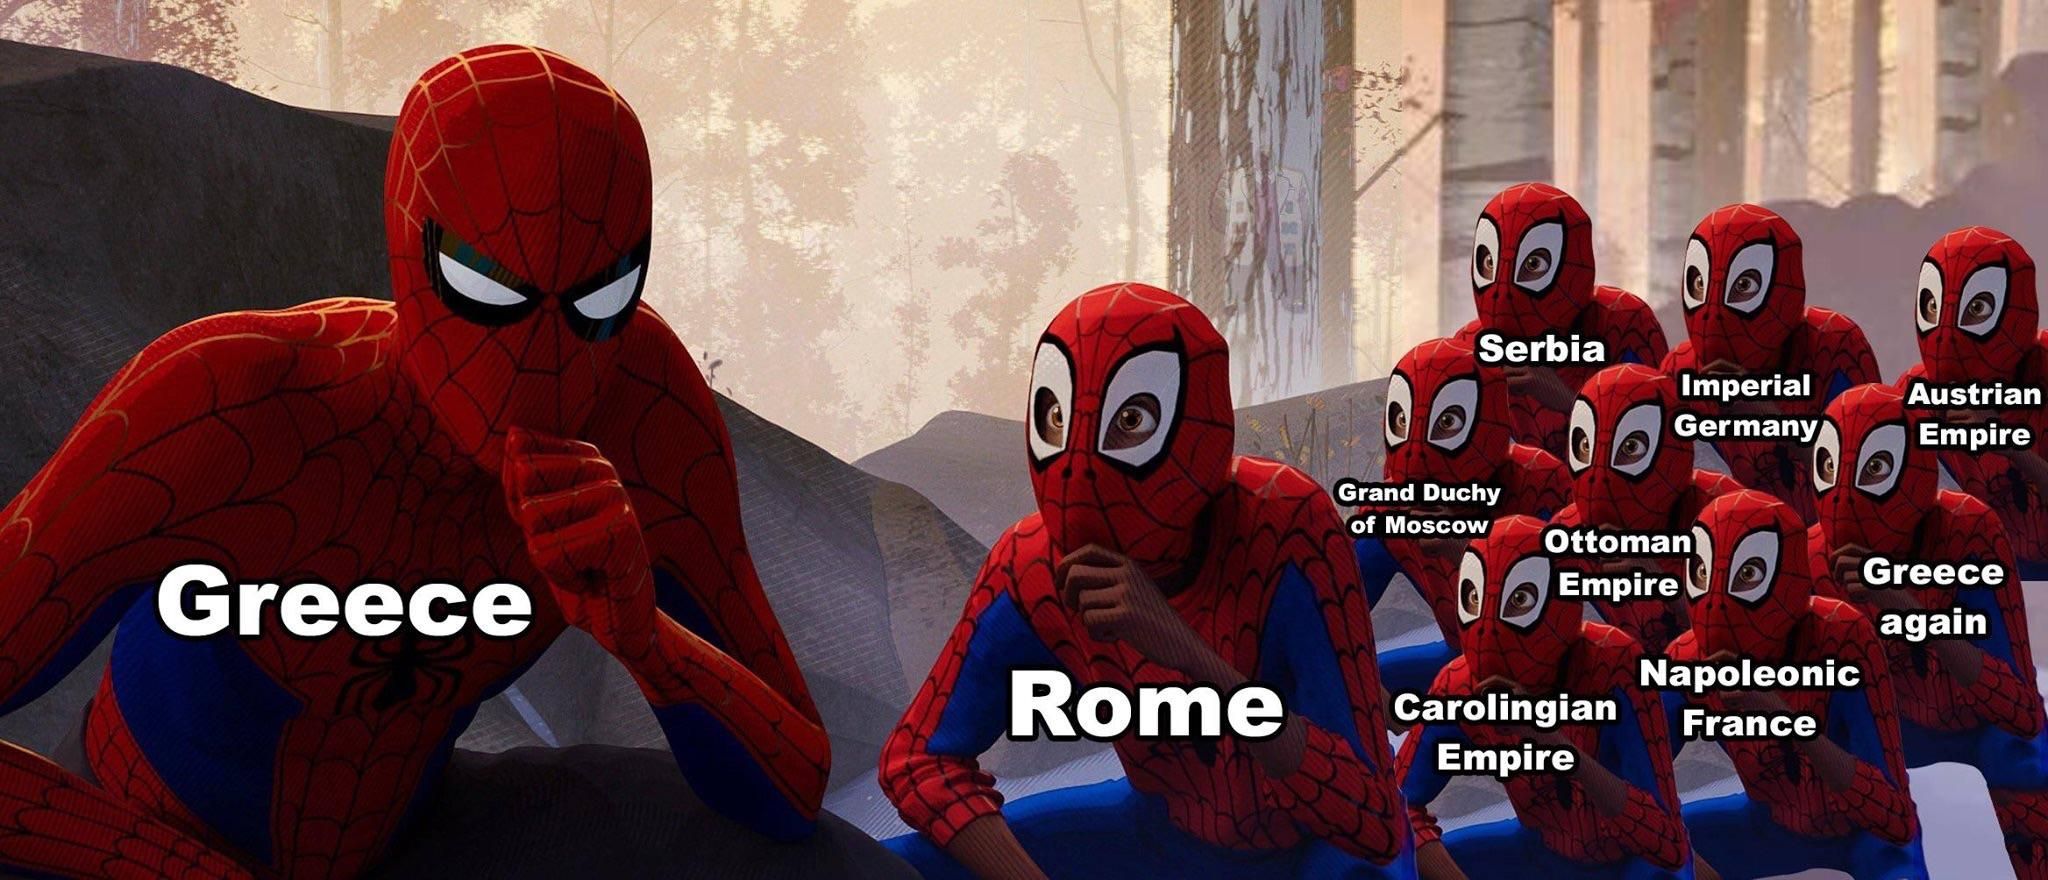 Spider-Verse Greek/Roman history meme.